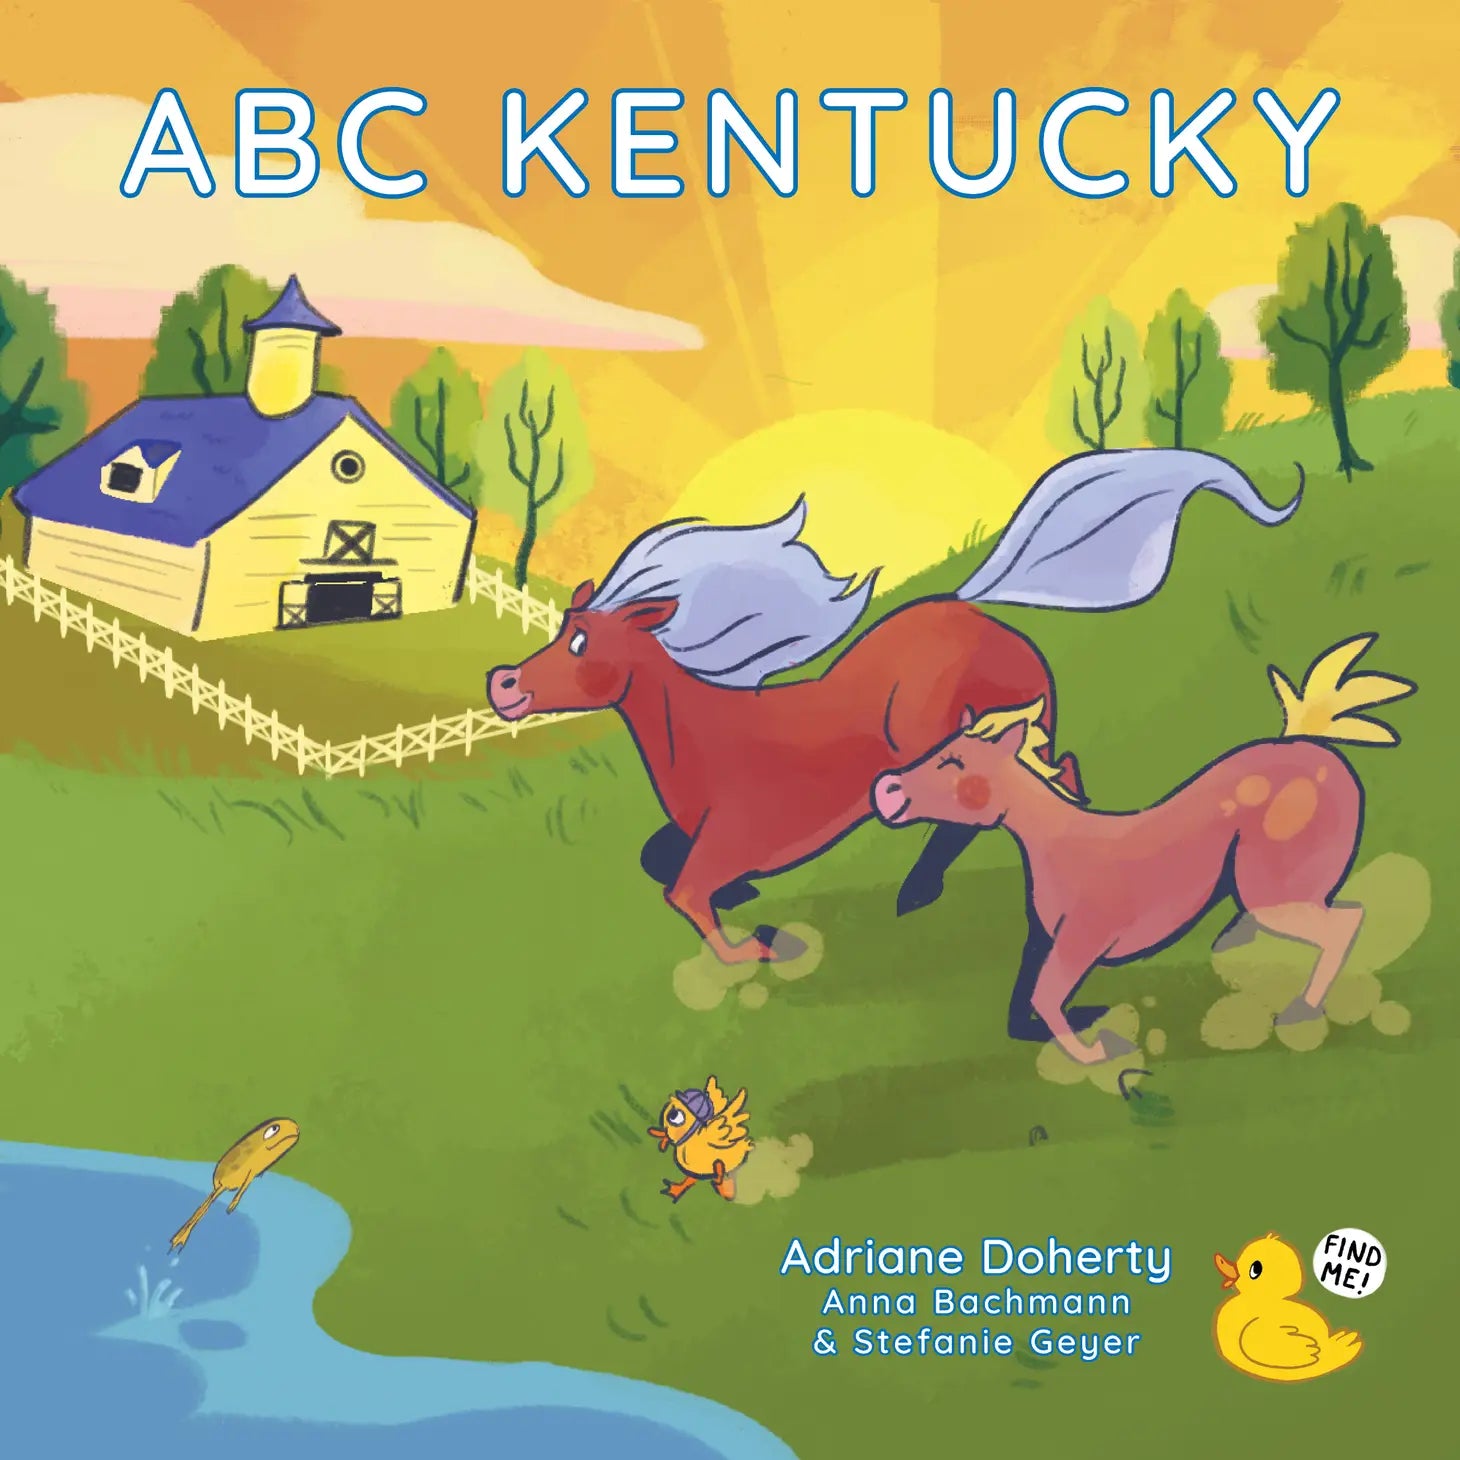 ABC Kentucky